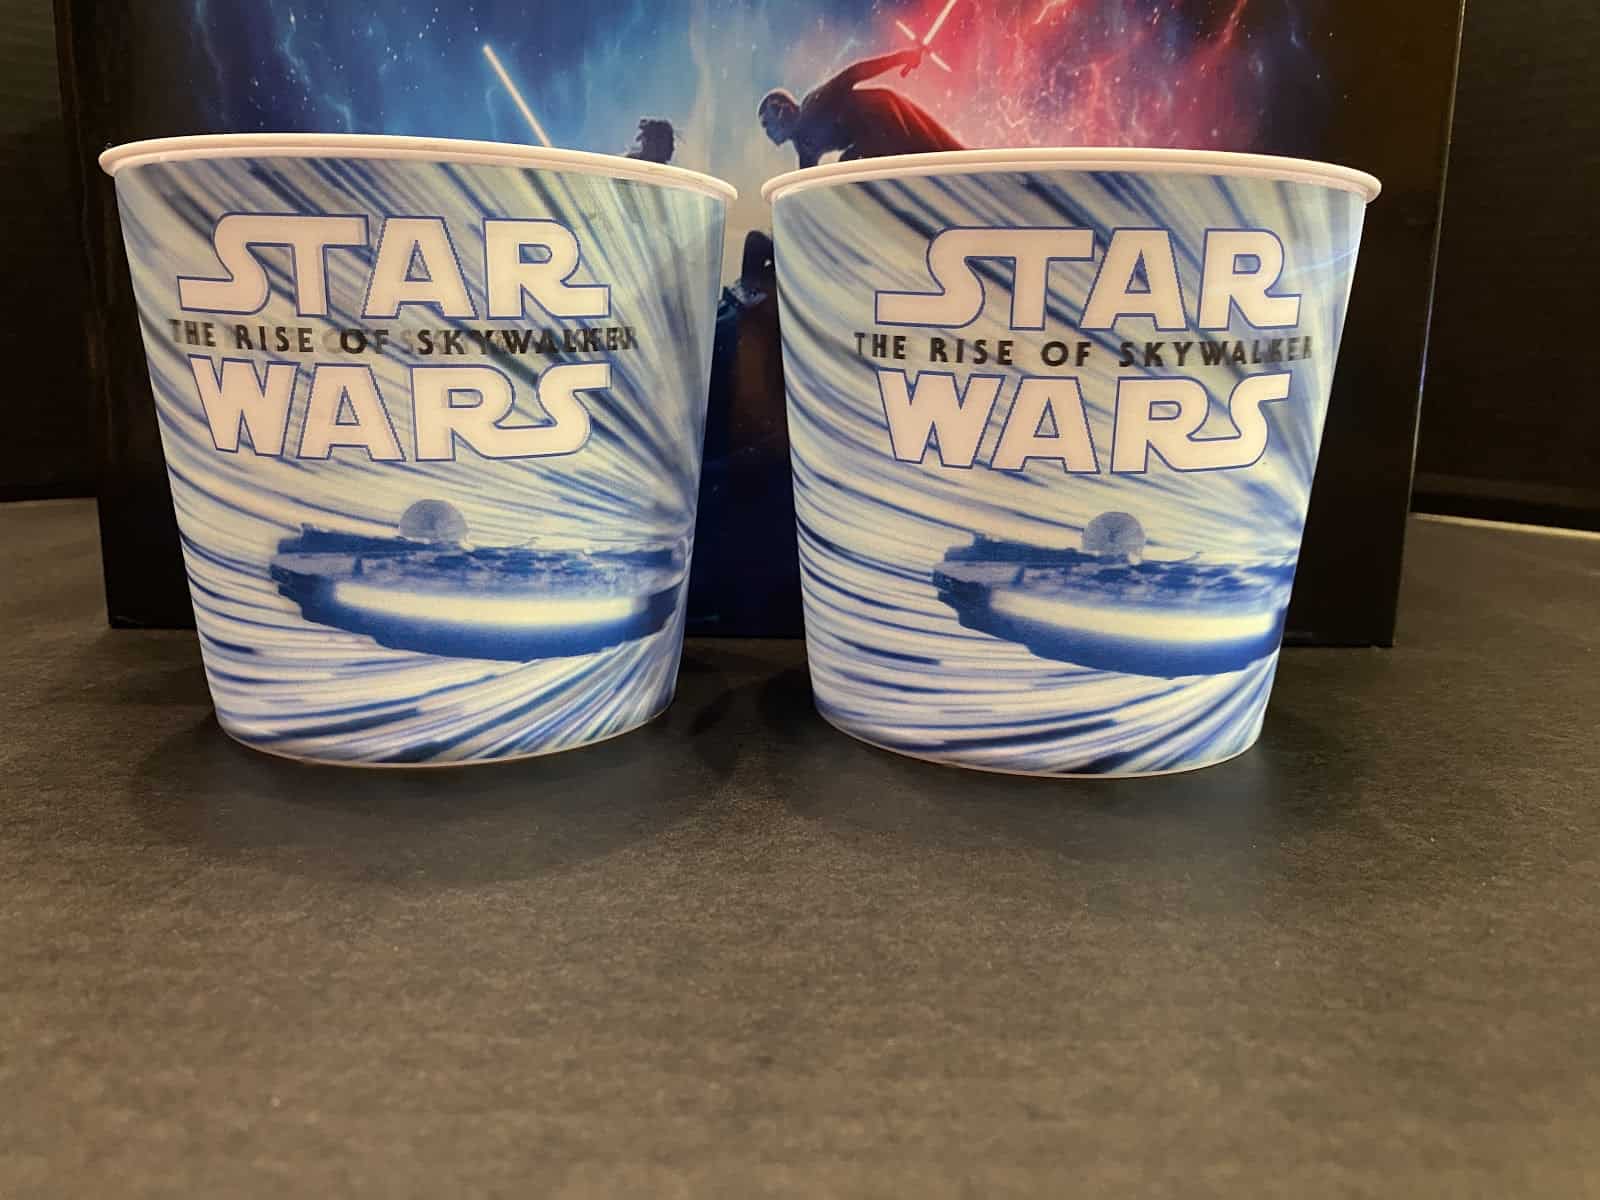 Star Wars: The Rise of Skywalker Movie Popcorn Bucket